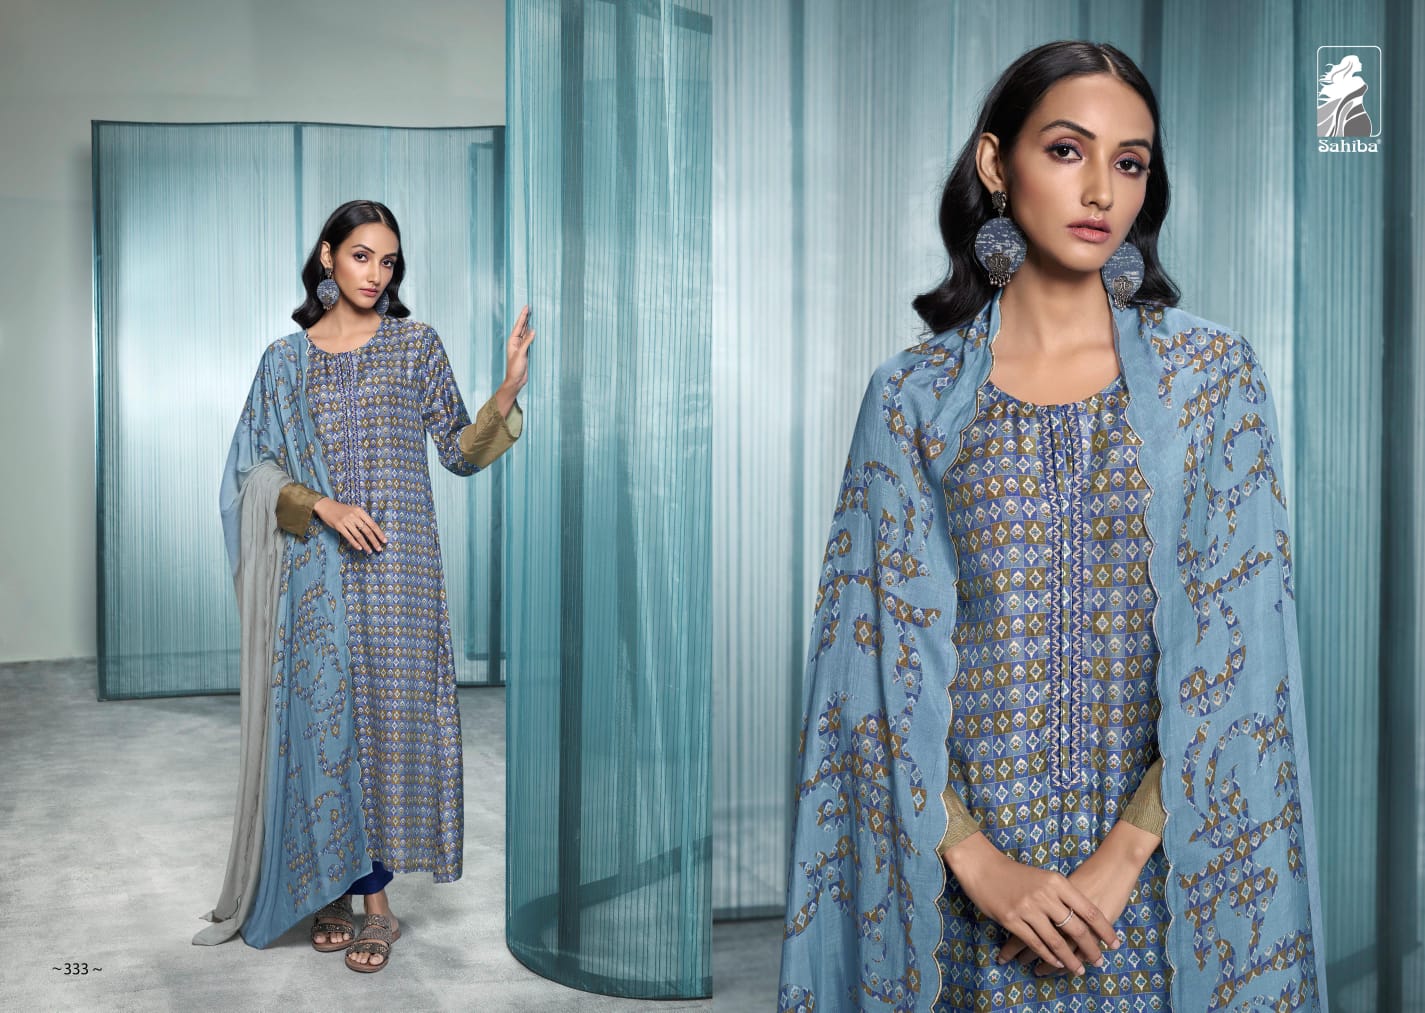 Janvi Sahiba Muslin Silk Pant Style Suits